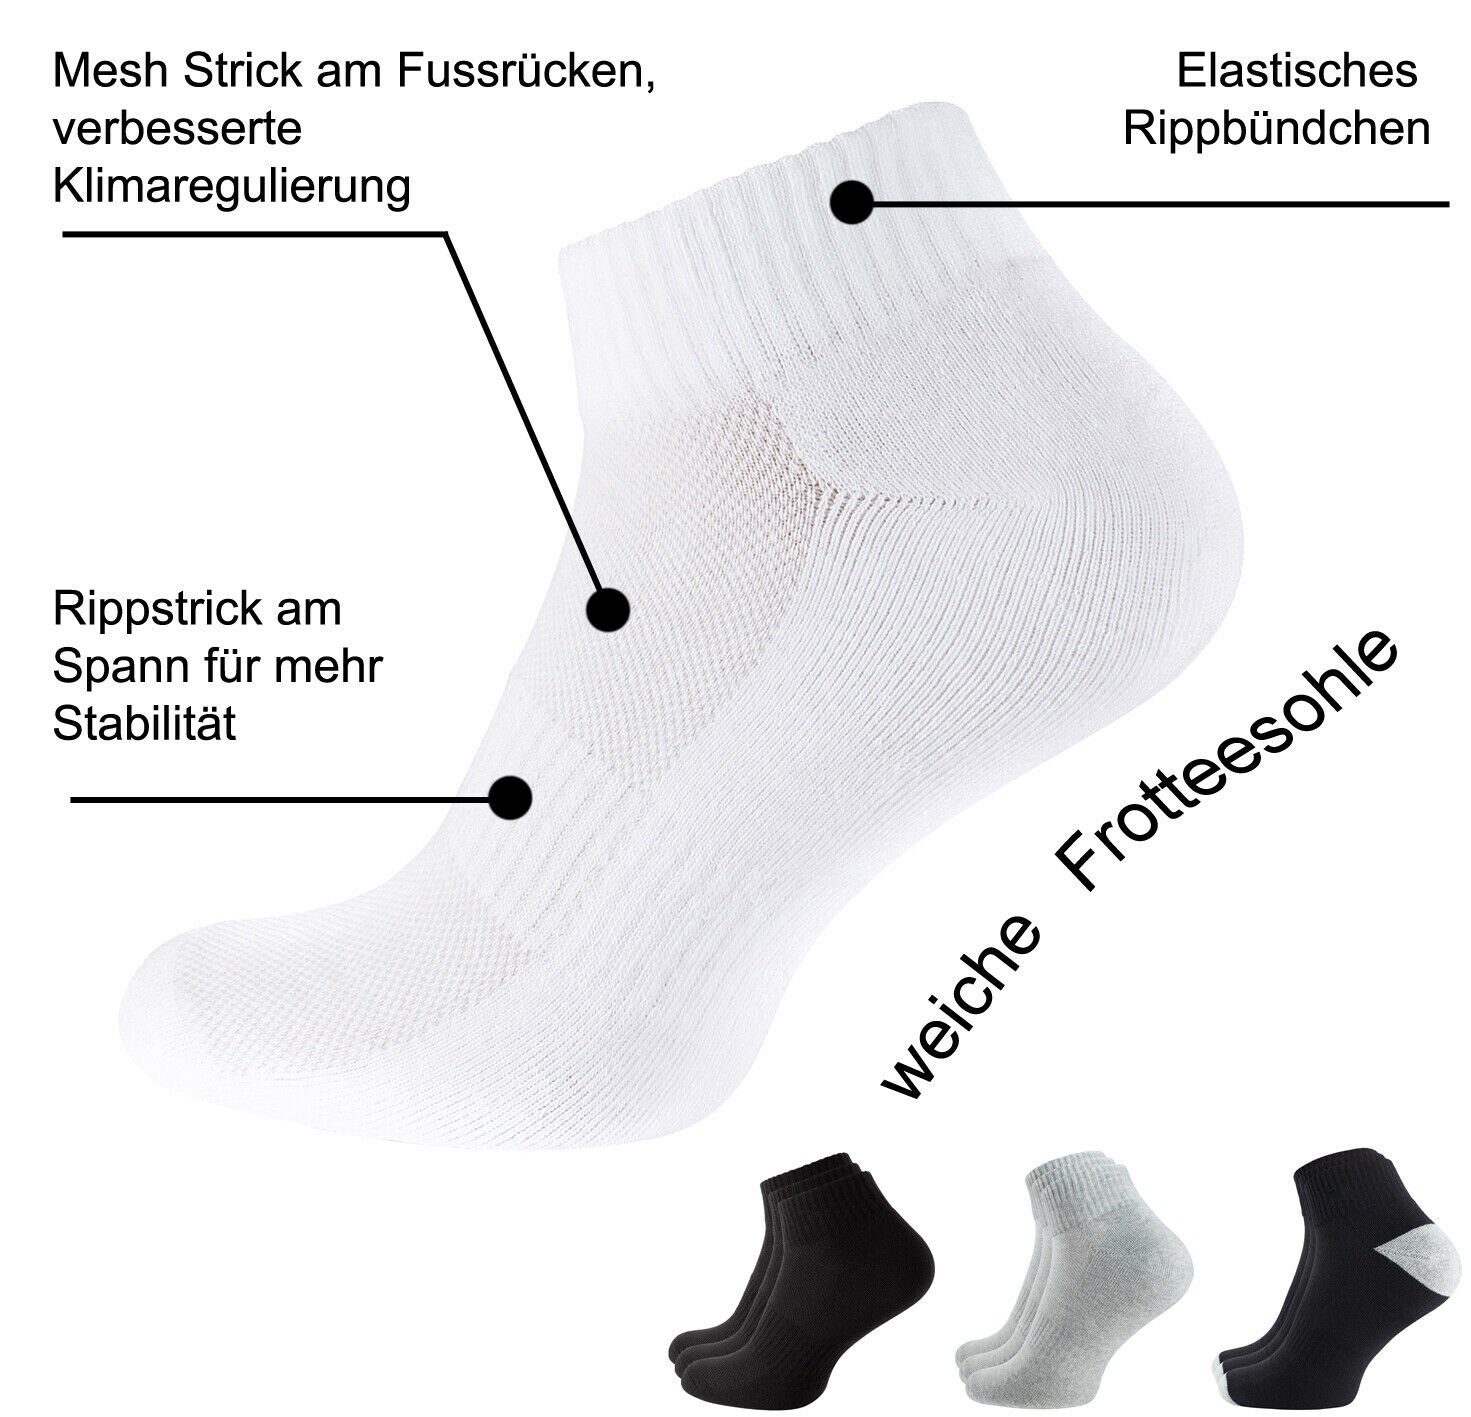 Stark Soul® Sportsocken Quarter Frotteesole Schwarz-Grau Paar Mesh-Strick 6 Socken-Sportsocken mit und